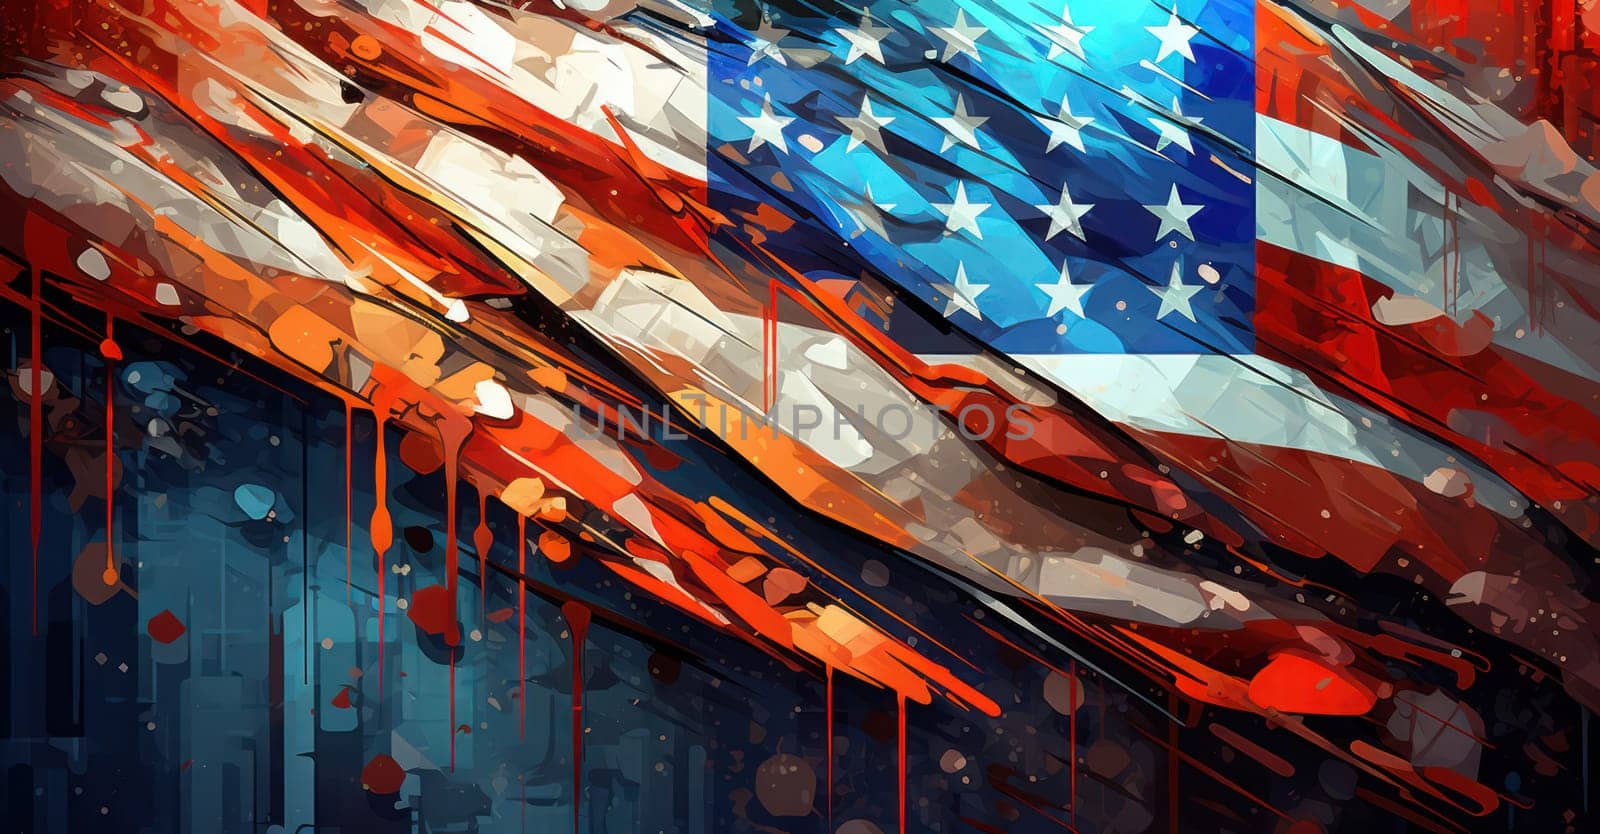 Patriotic United States Flag Illustration on Grunge Background. by Vichizh